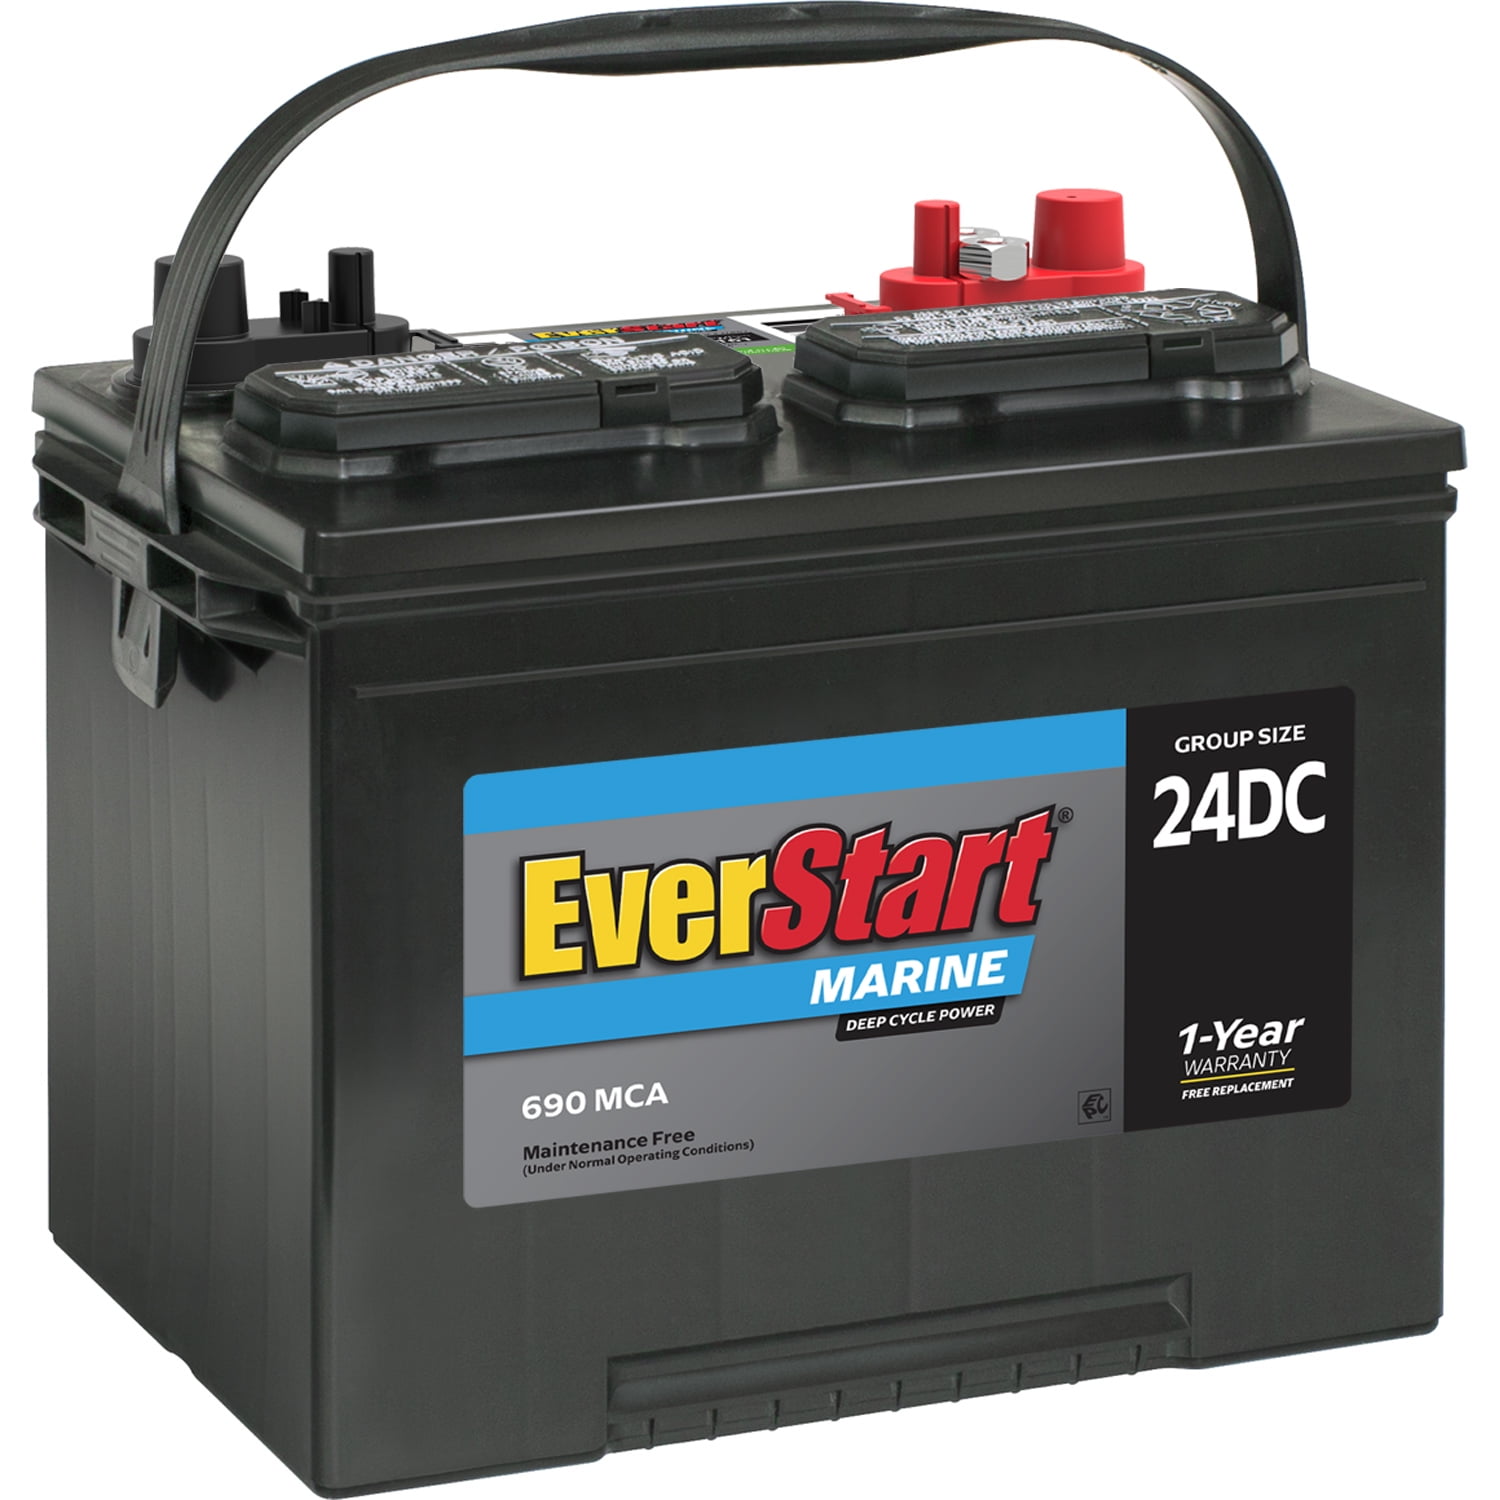 Everstart Lead Acid Marine & RV Deep Cycle Battery, Group Size 24DC (12 Volt/690 MCA)